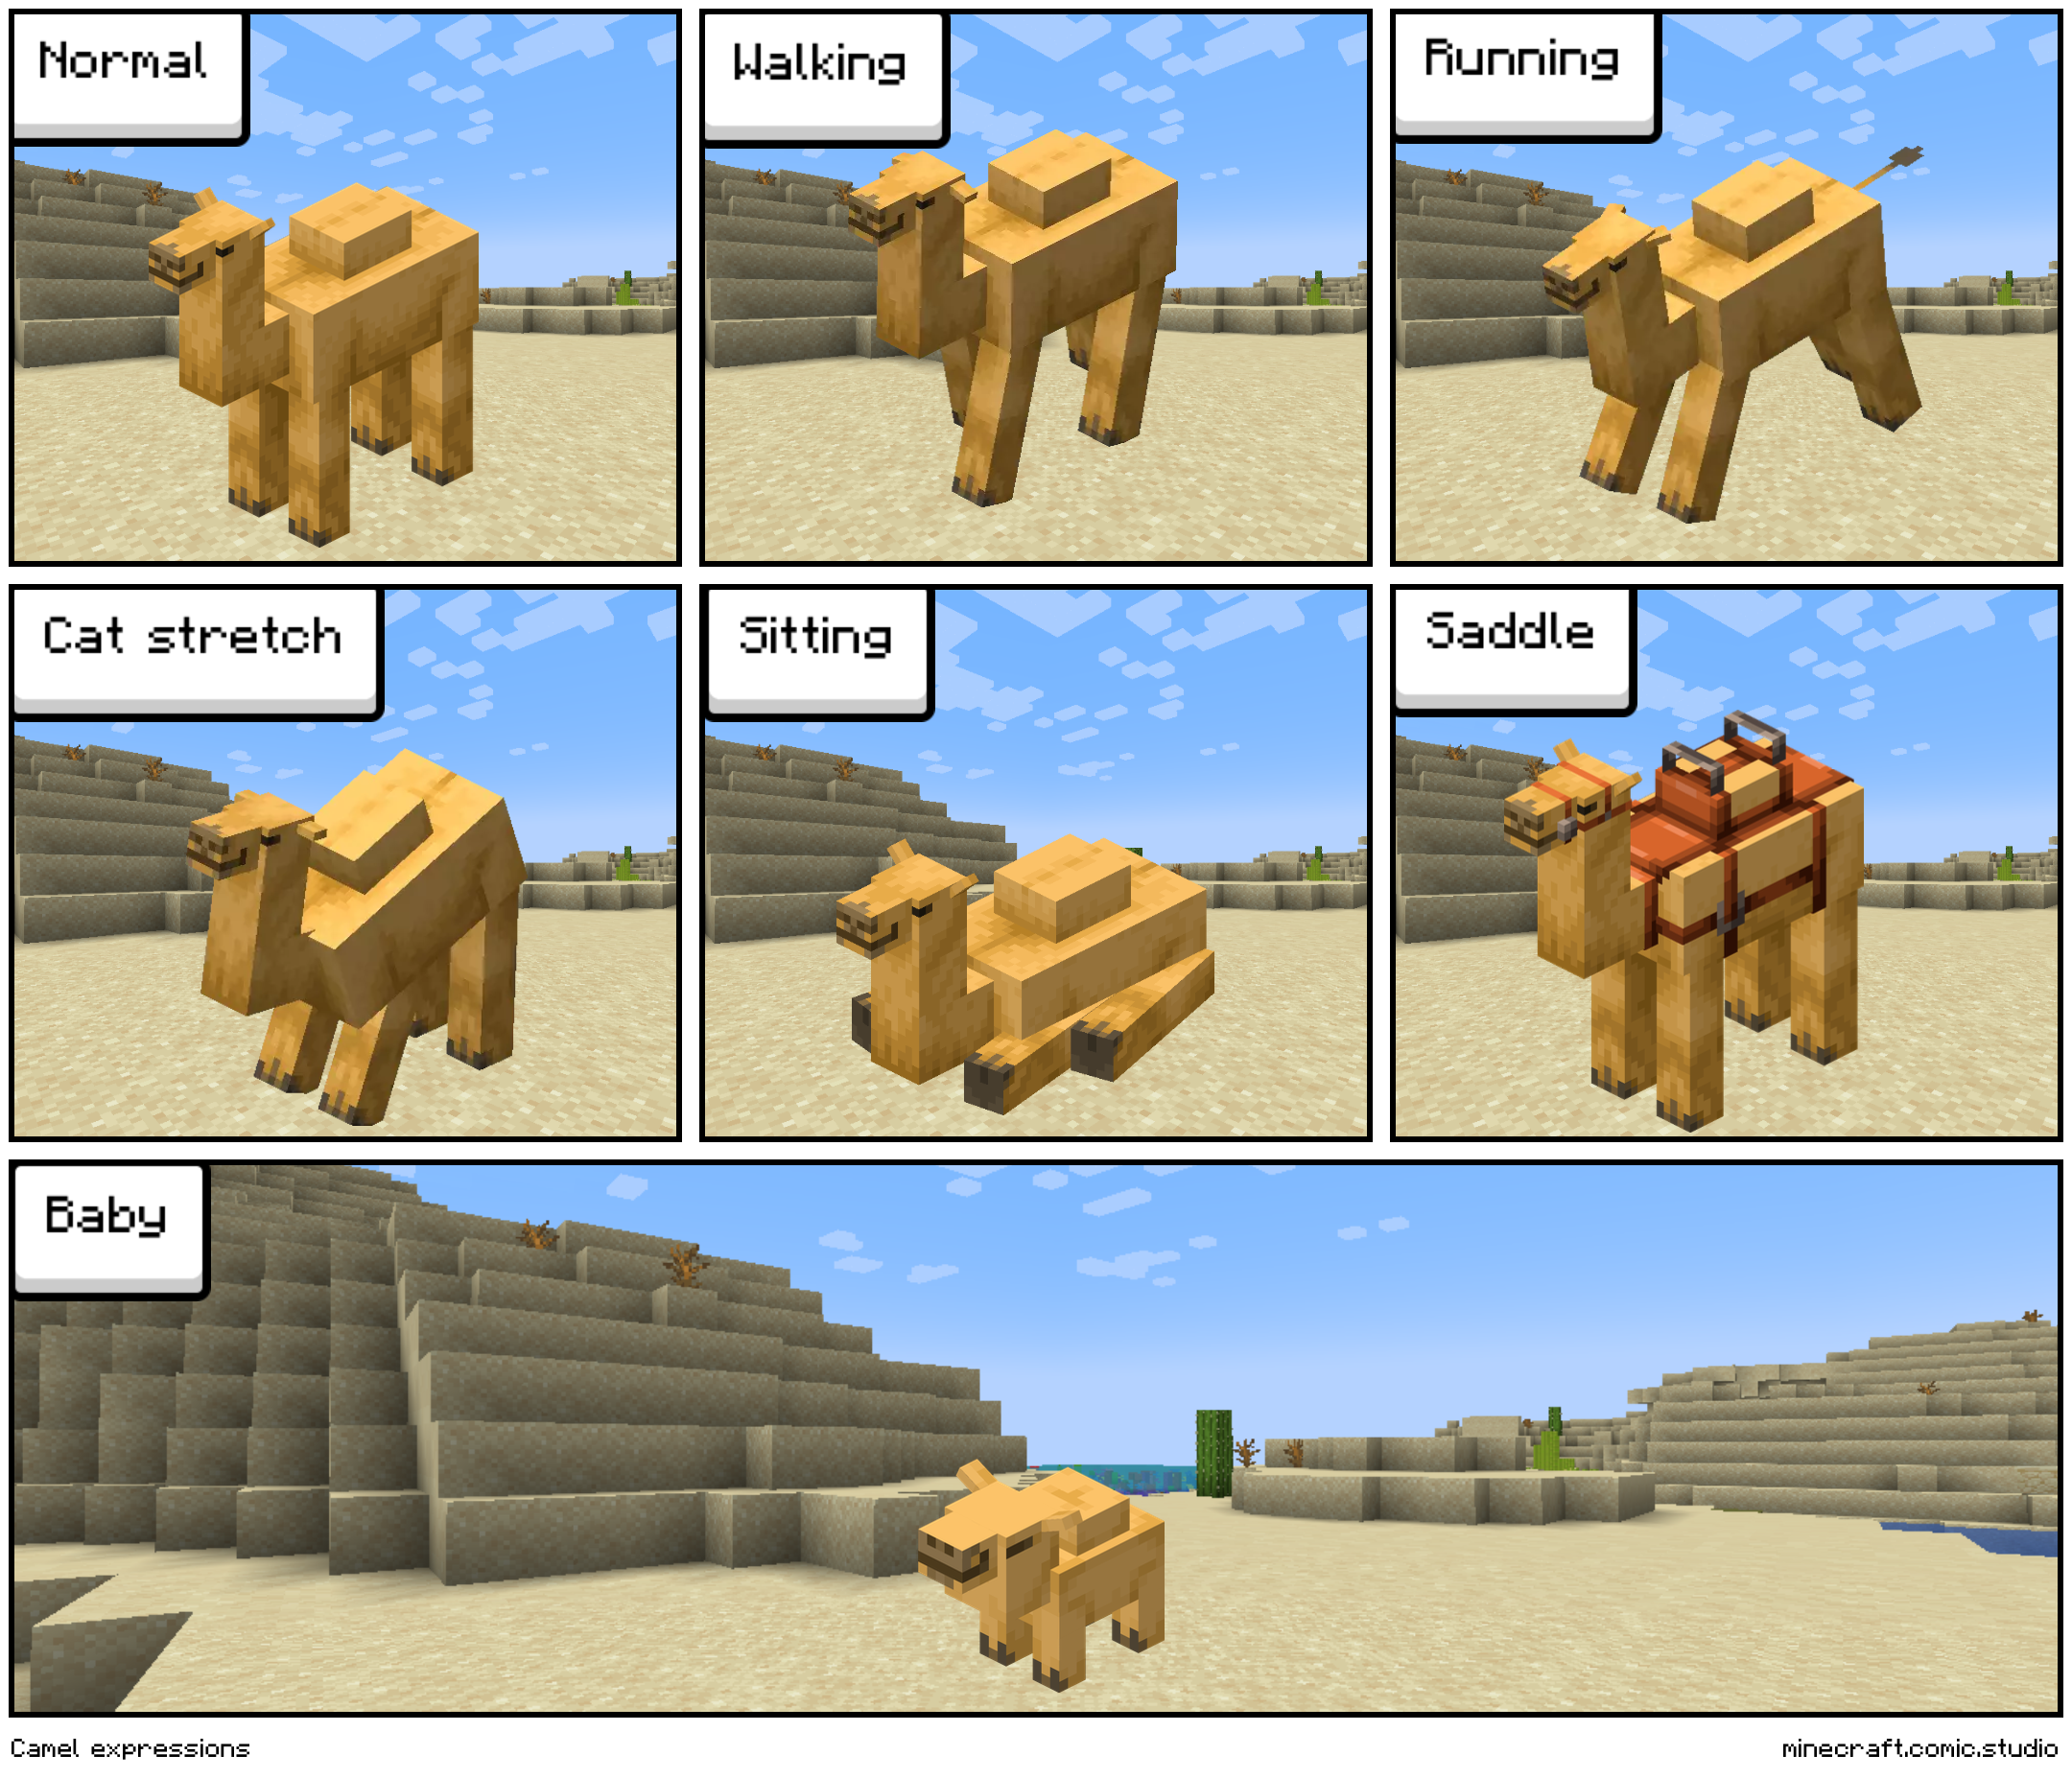 Camel expressions